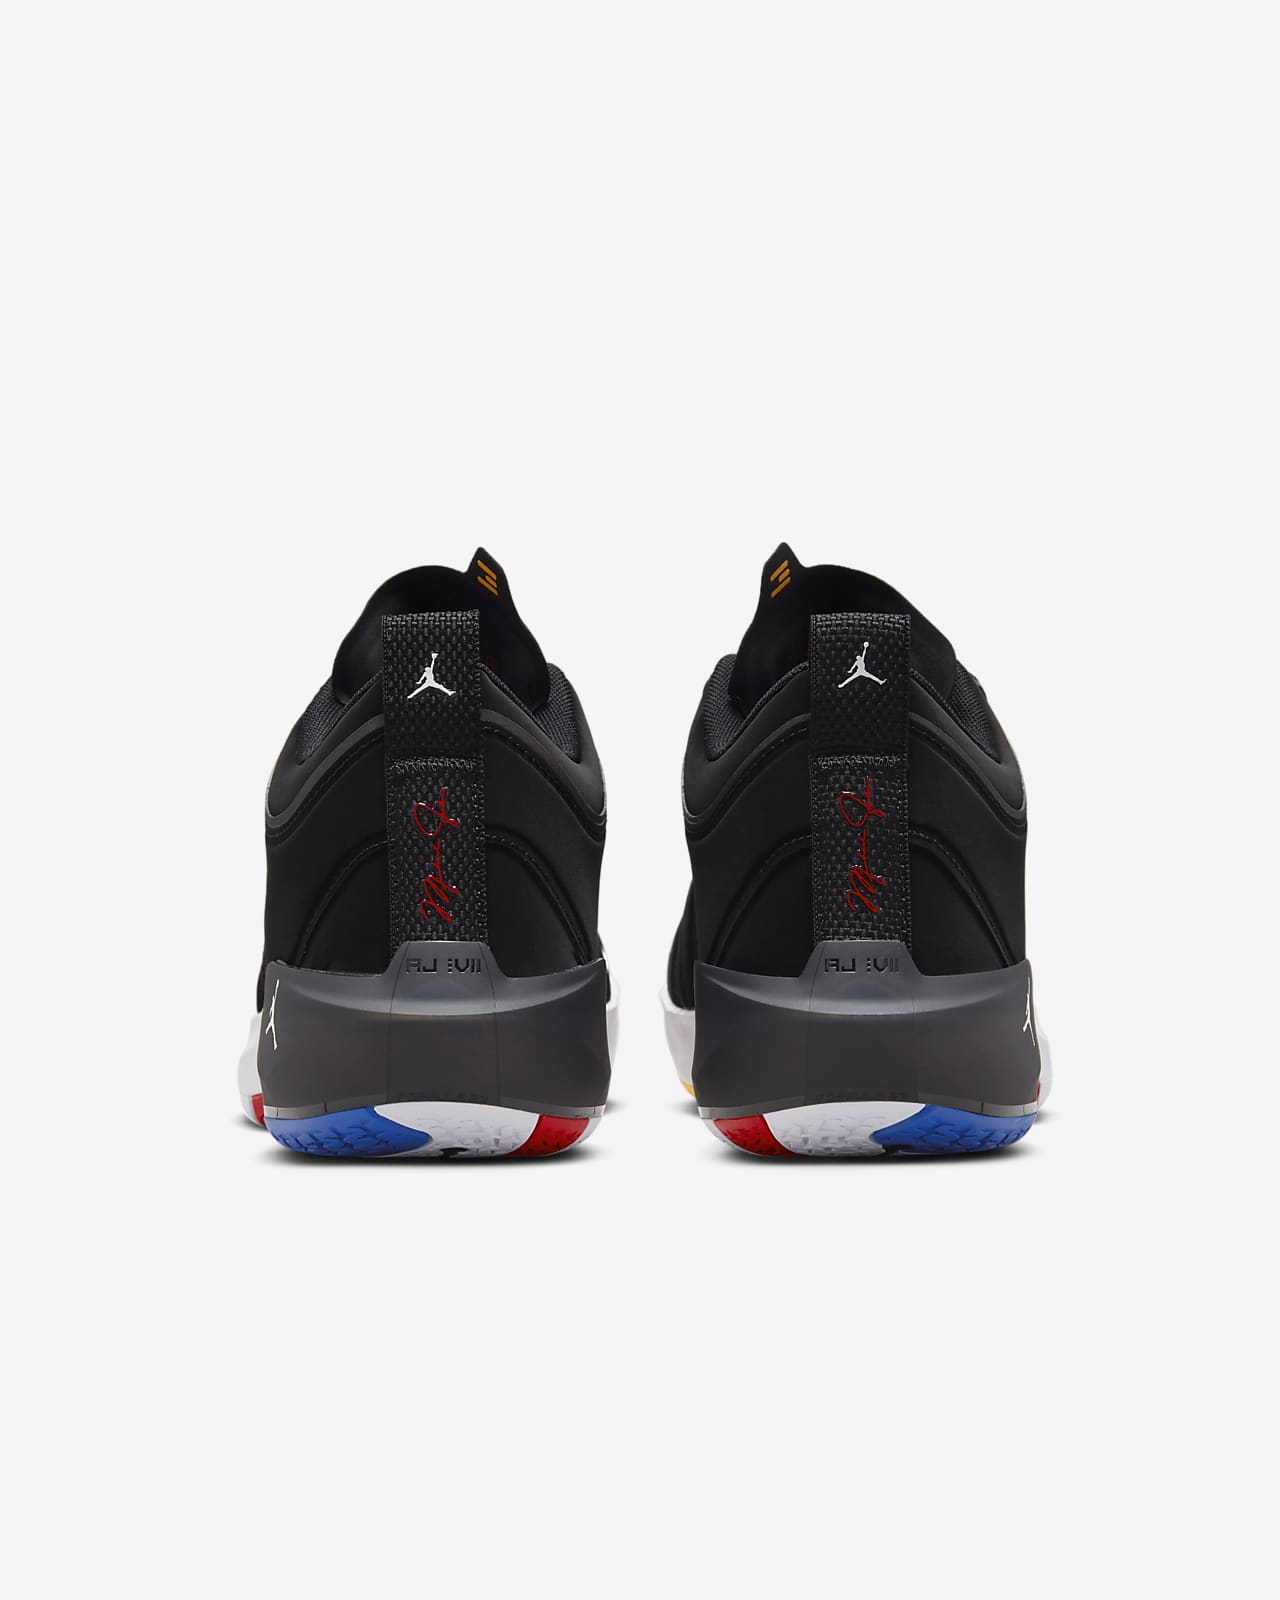 Air Jordan XXXVII Low Basketball Shoes. Nike DK